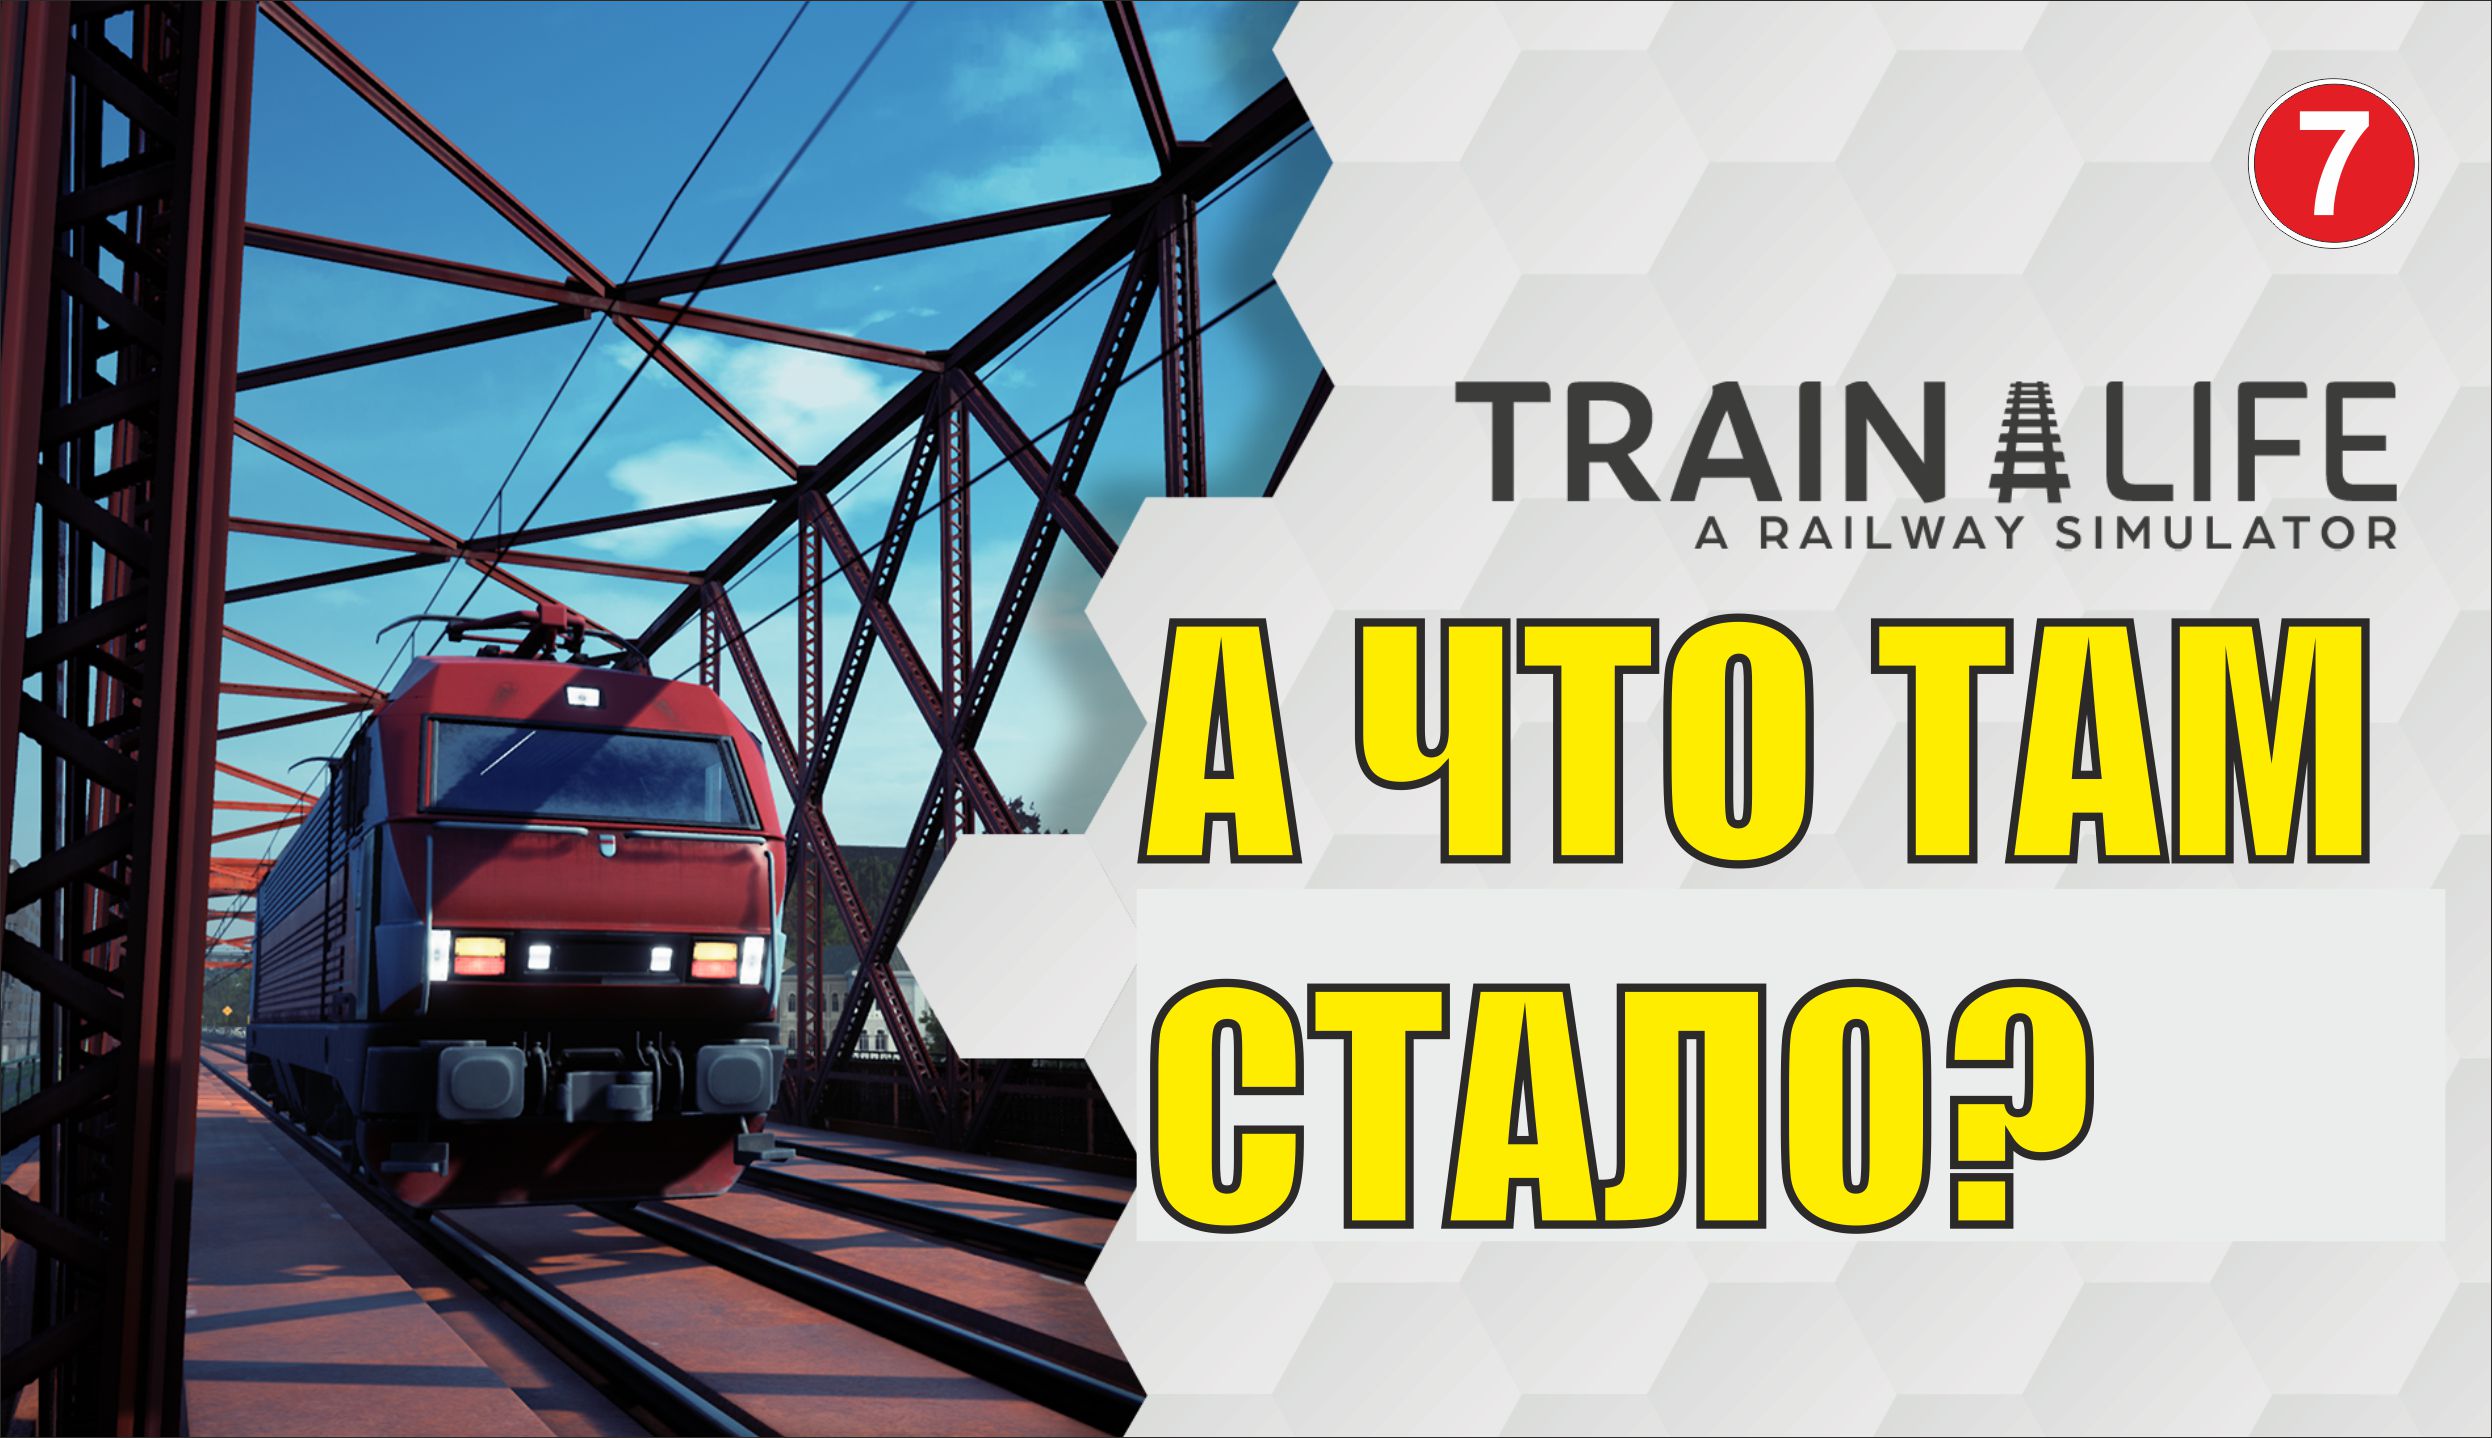 Train Life: A Railway Simulator - А что там стало?